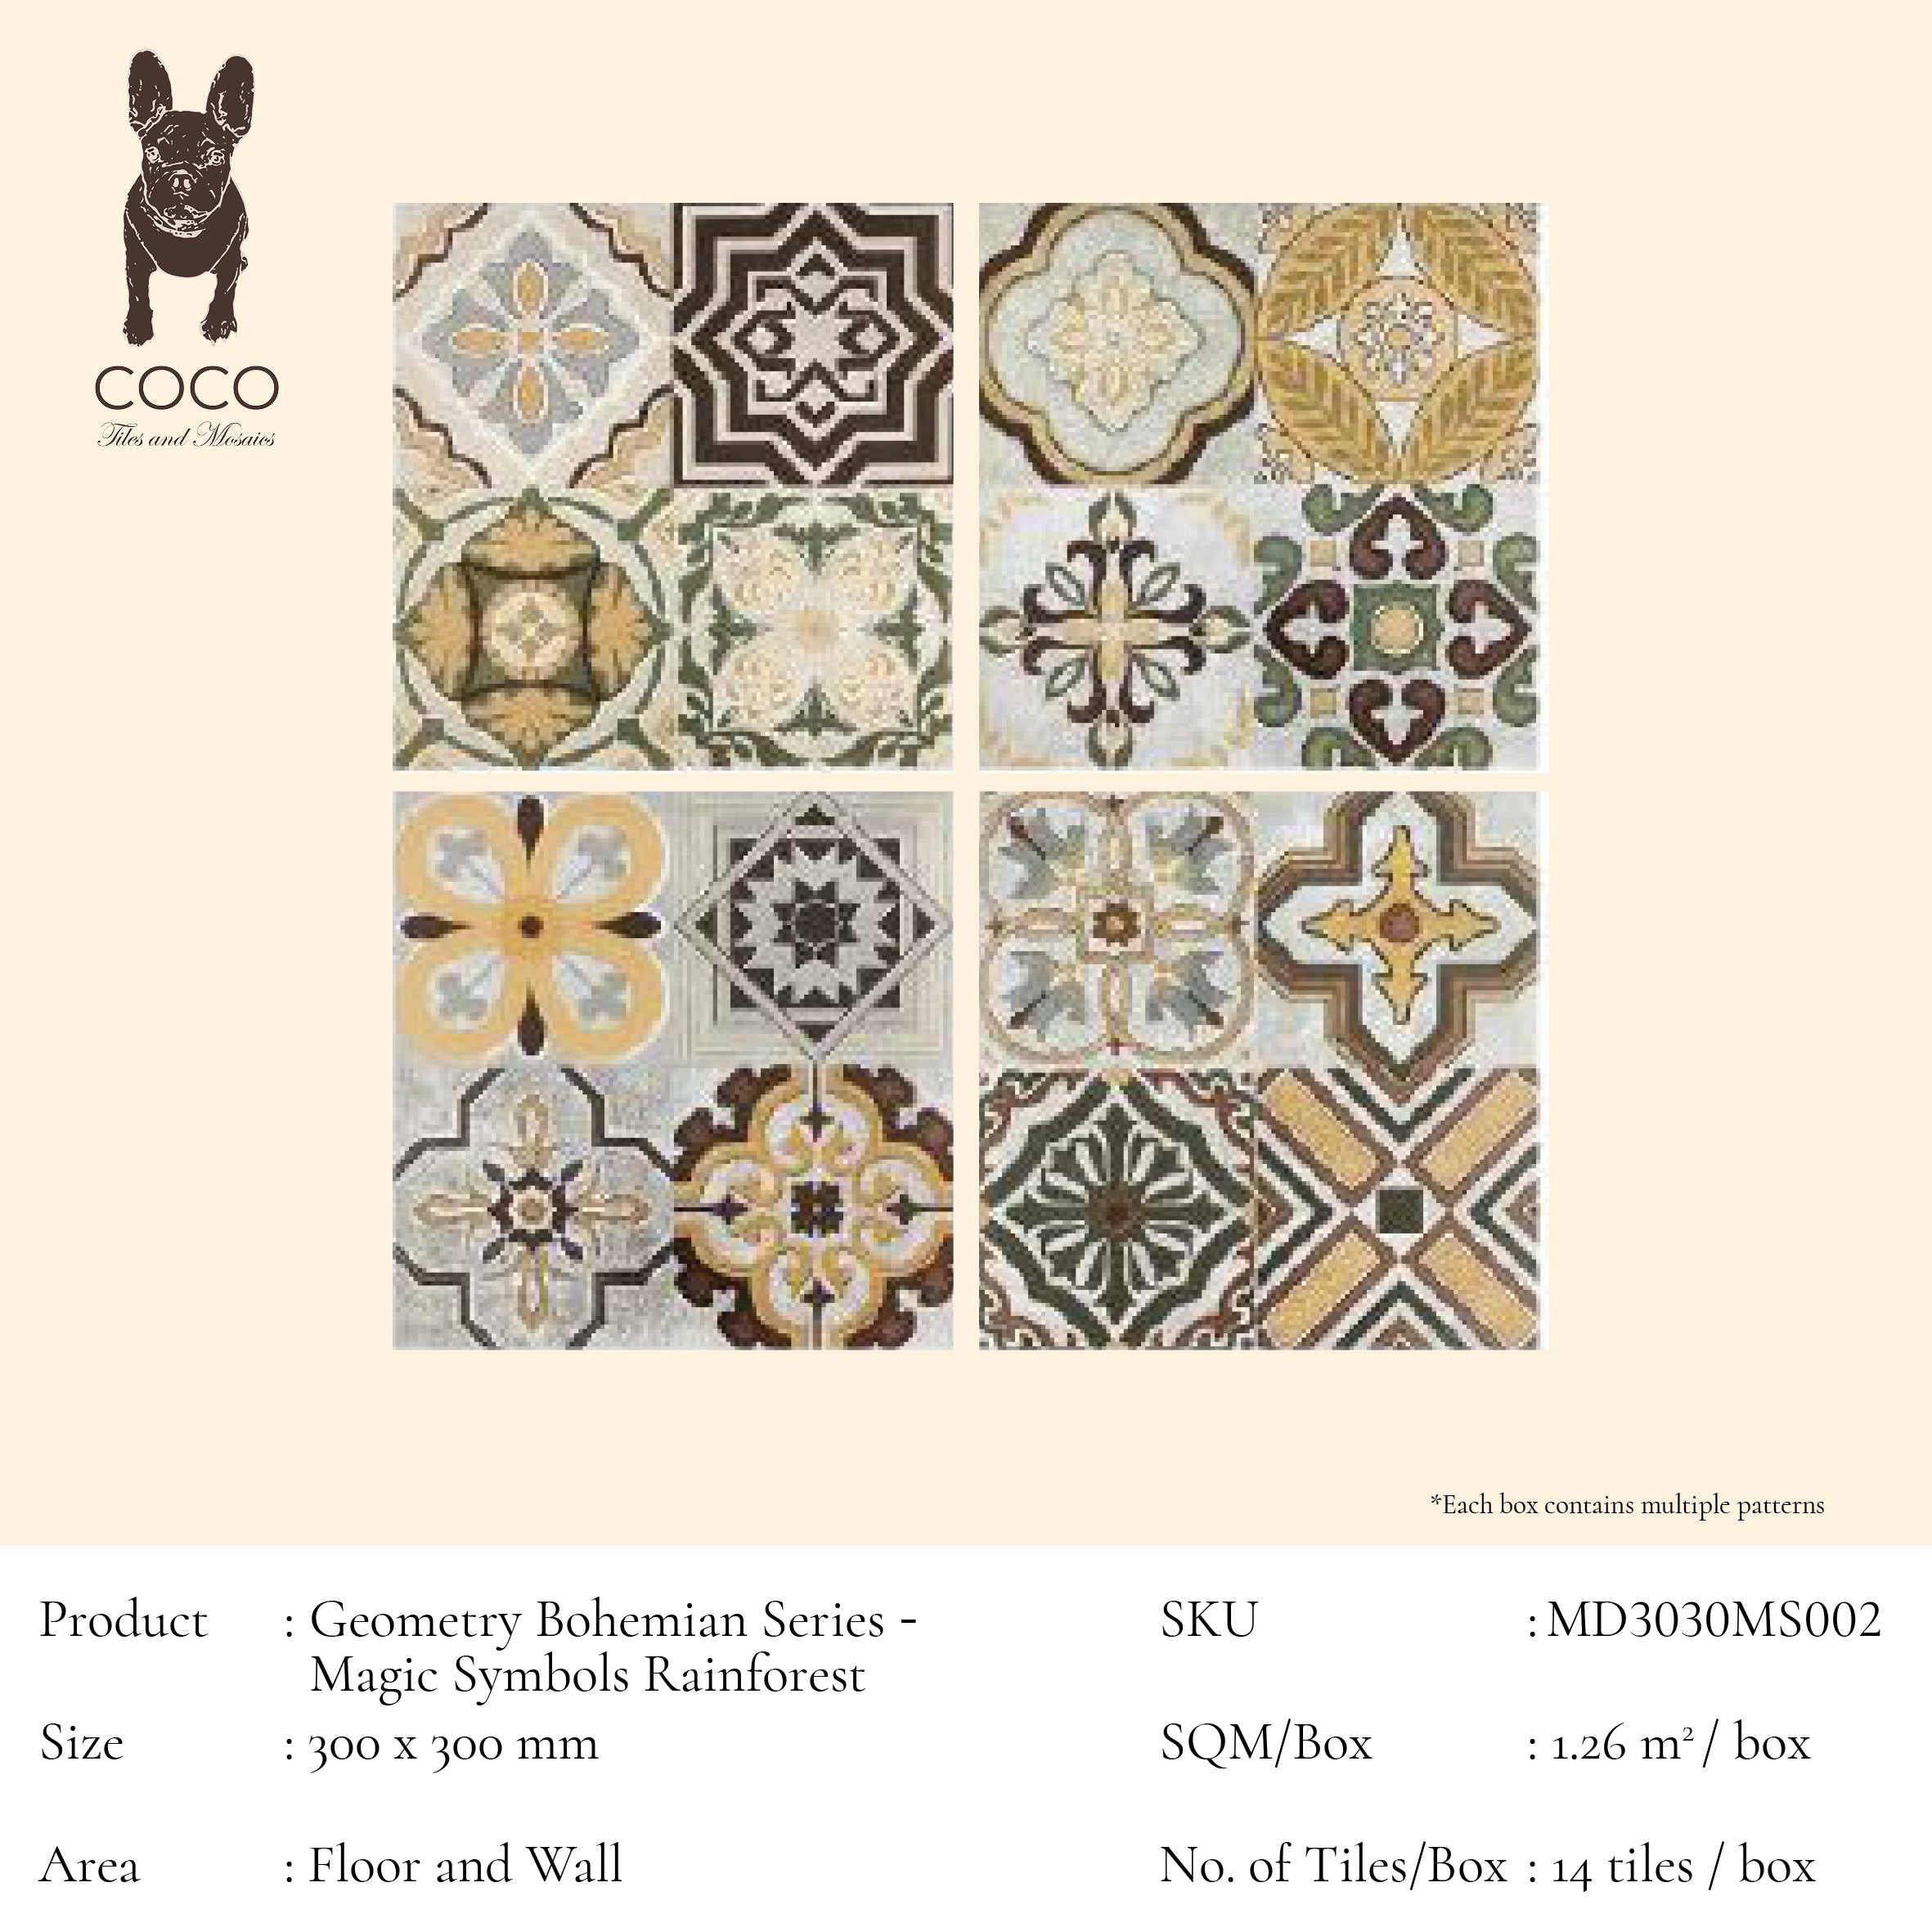 Geometry Bohemian Series - Magic Symbols Rainforest 300x300mm Ceramic Tile